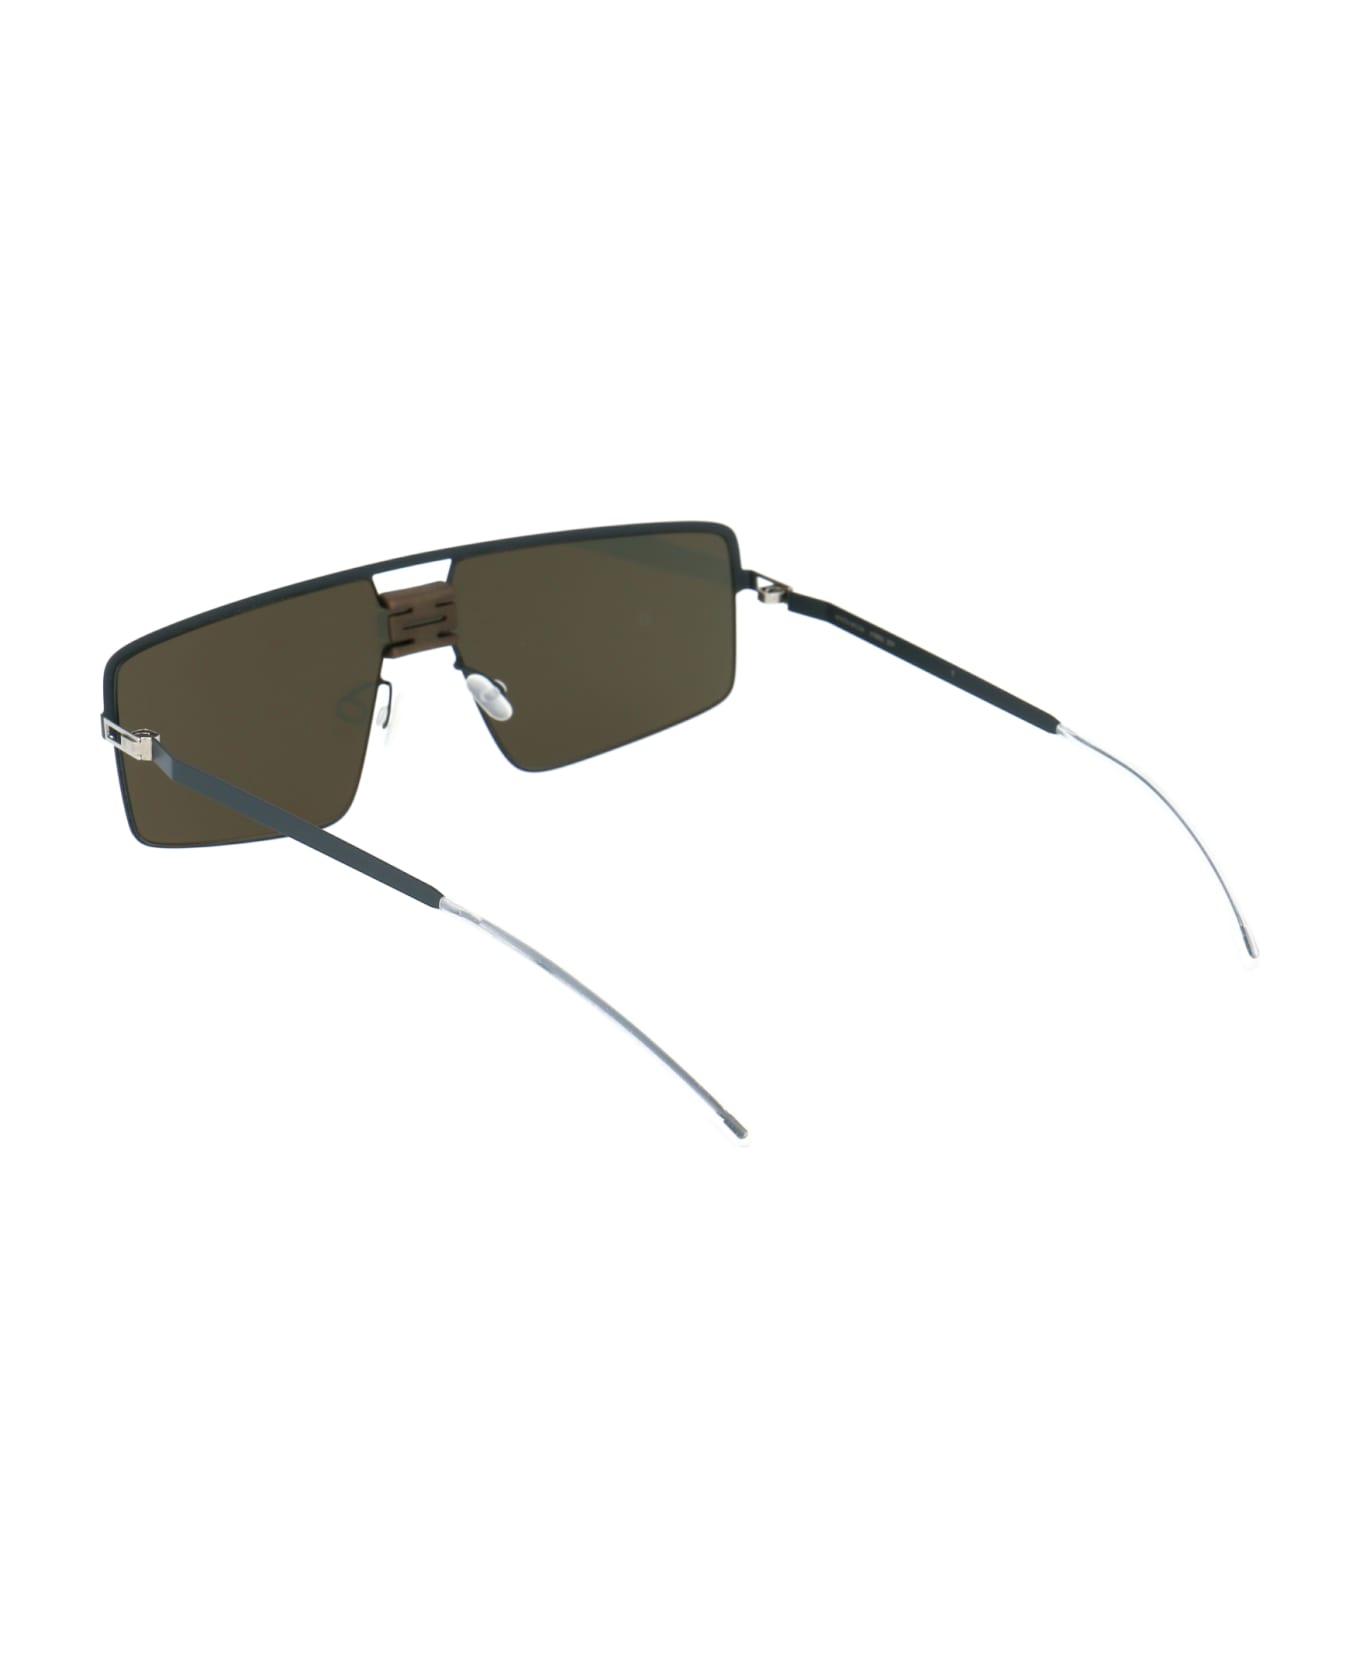 Mykita Soy Sunglasses - 472 MH50 Taupe Grey/Indigo Silver Flash Shield サングラス